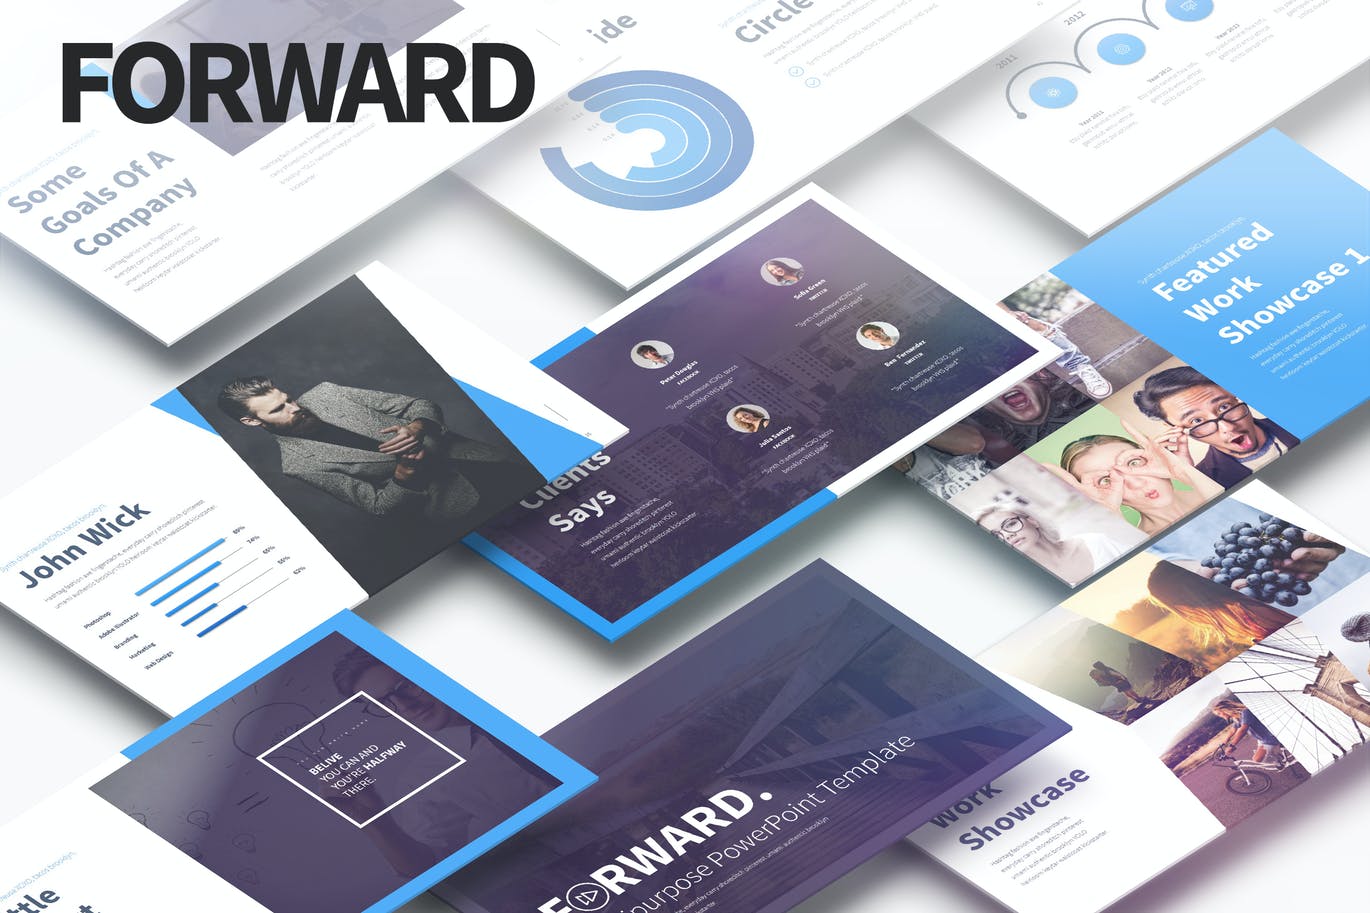 Forward - Multipurpose PowerPoint Presentation